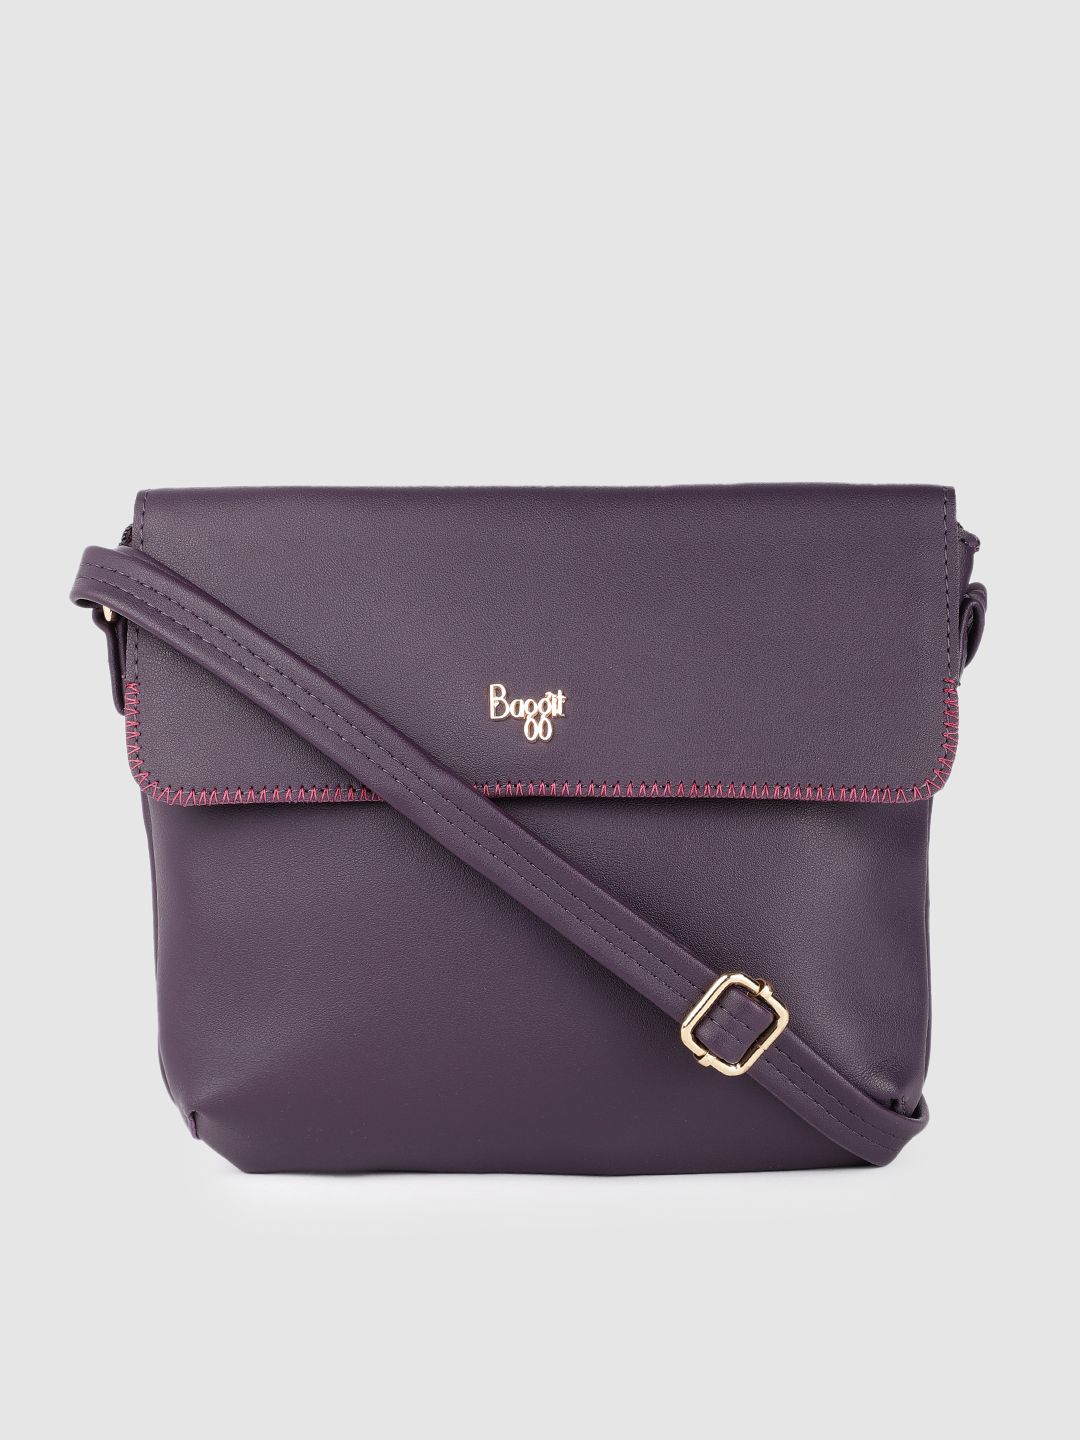 Baggit Violet Structured Sling Bag Price in India